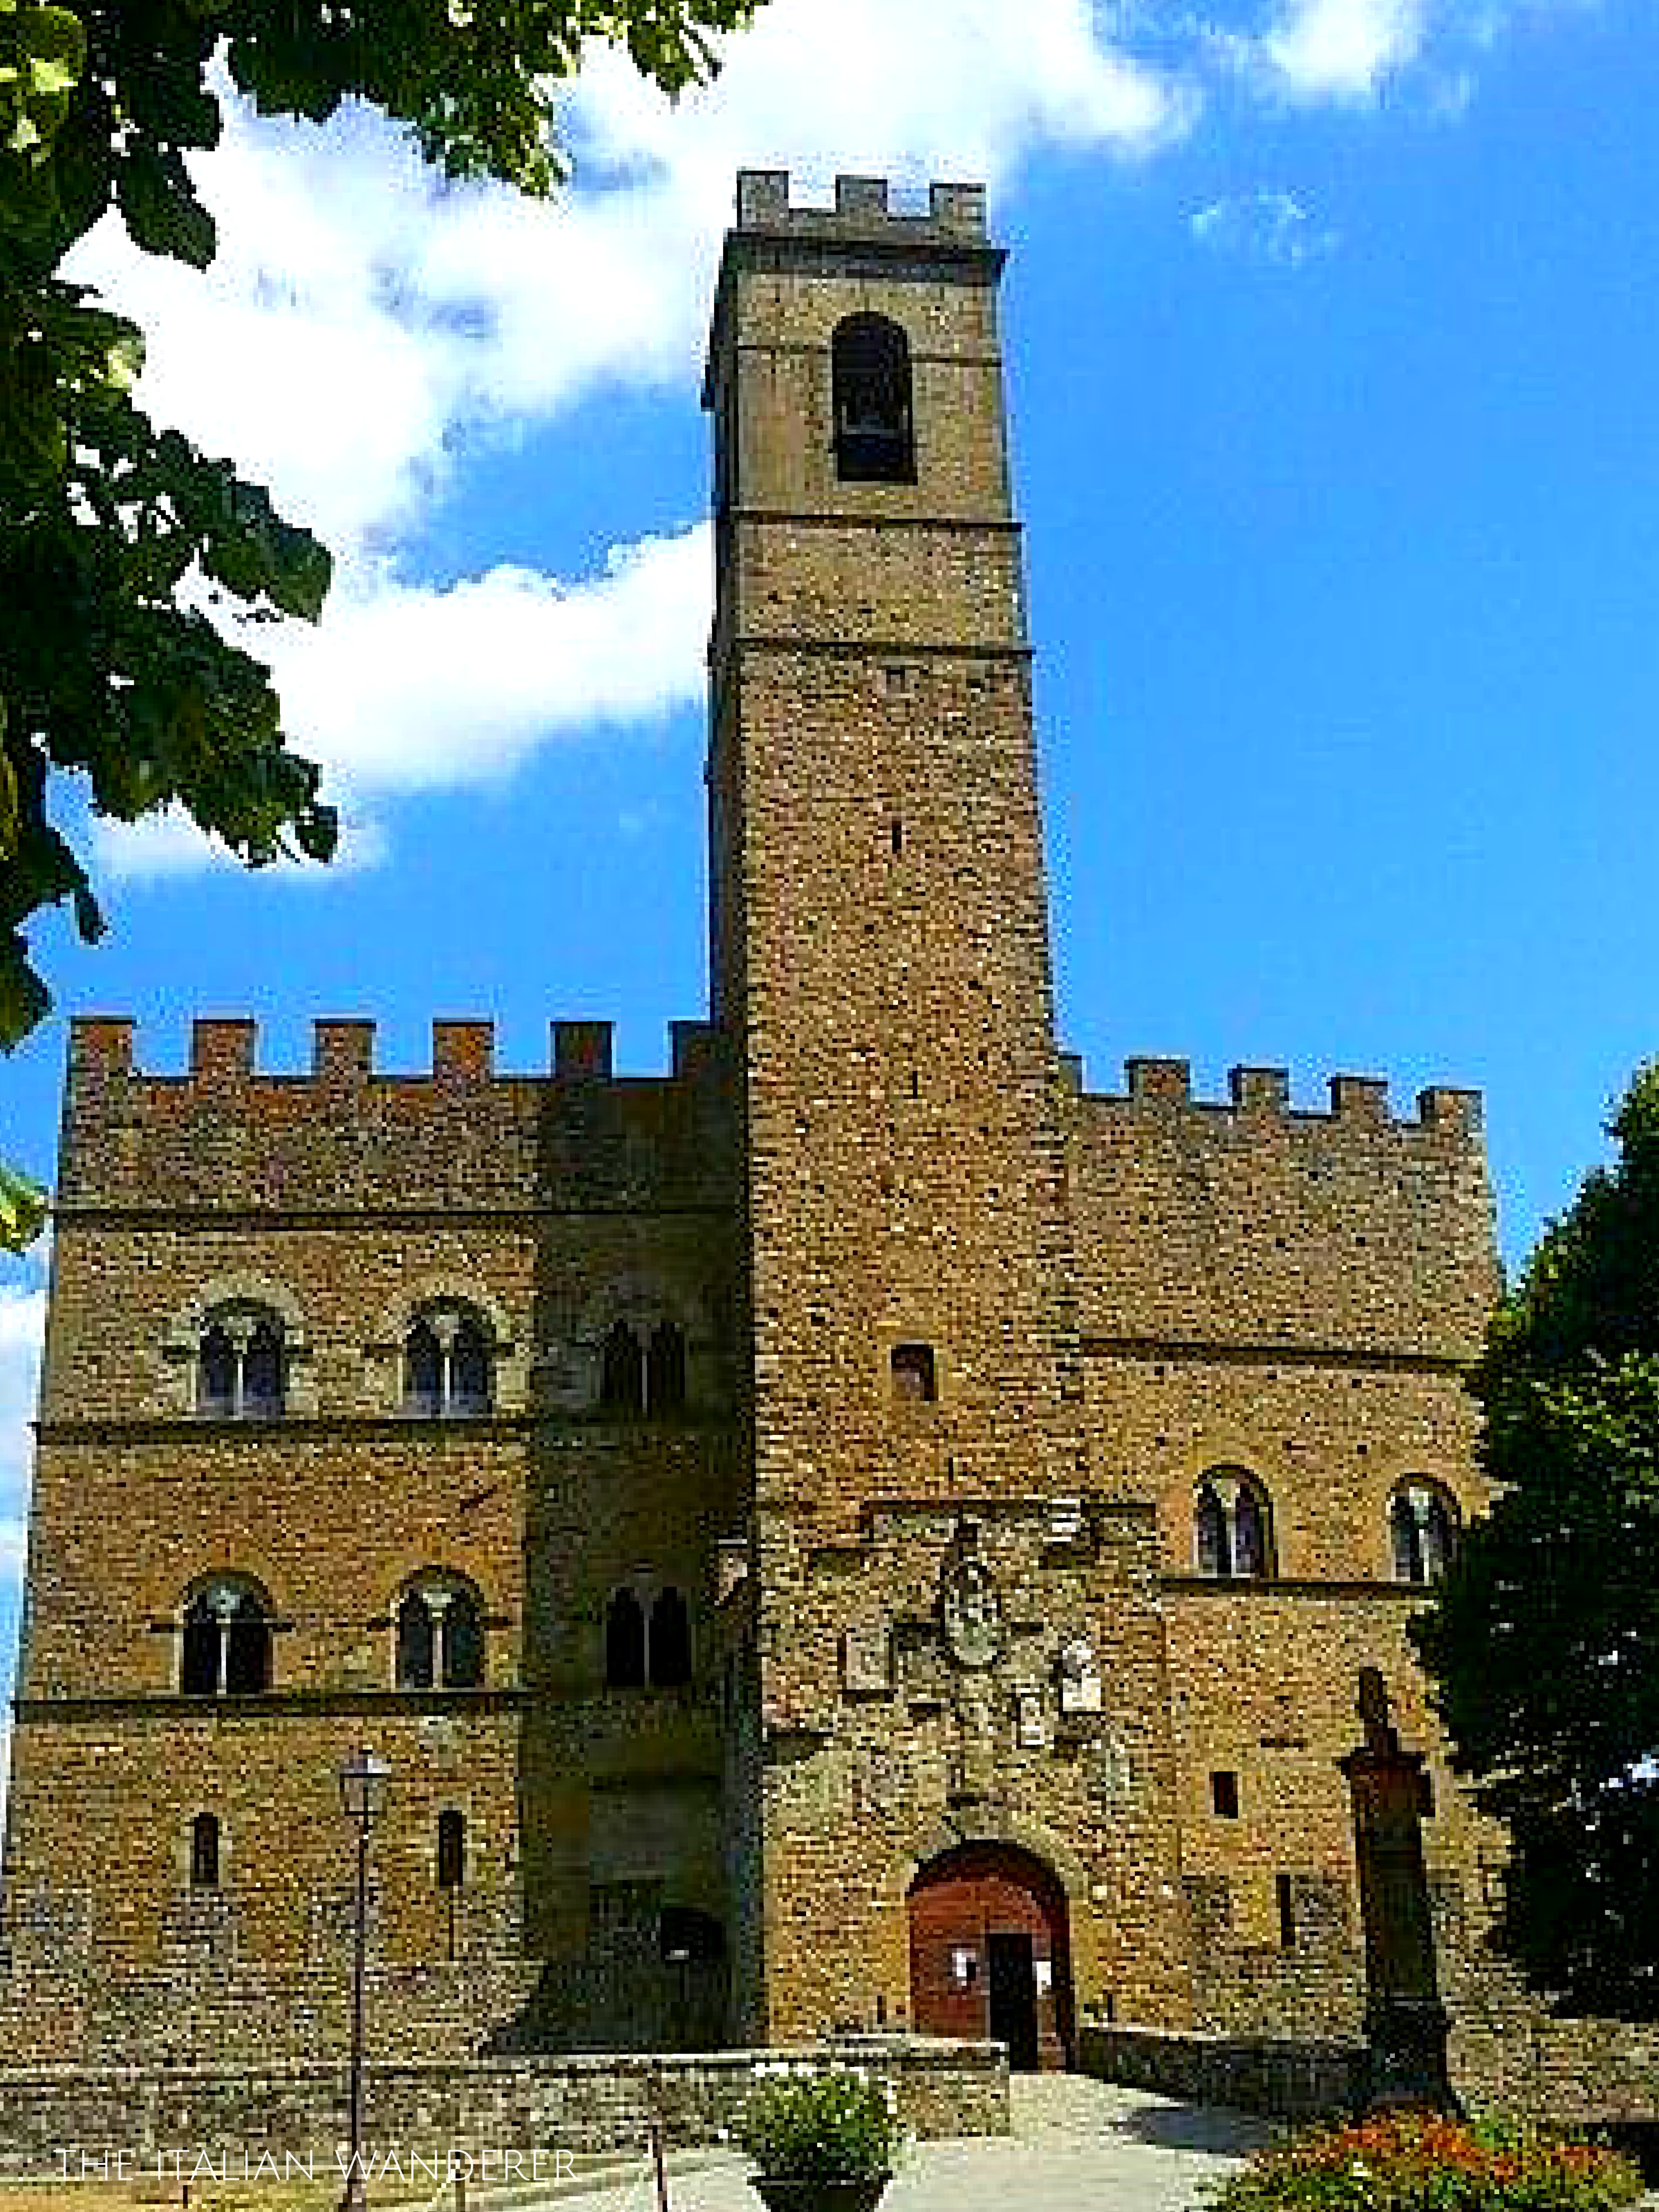 Castle of Poppi - Arezzo